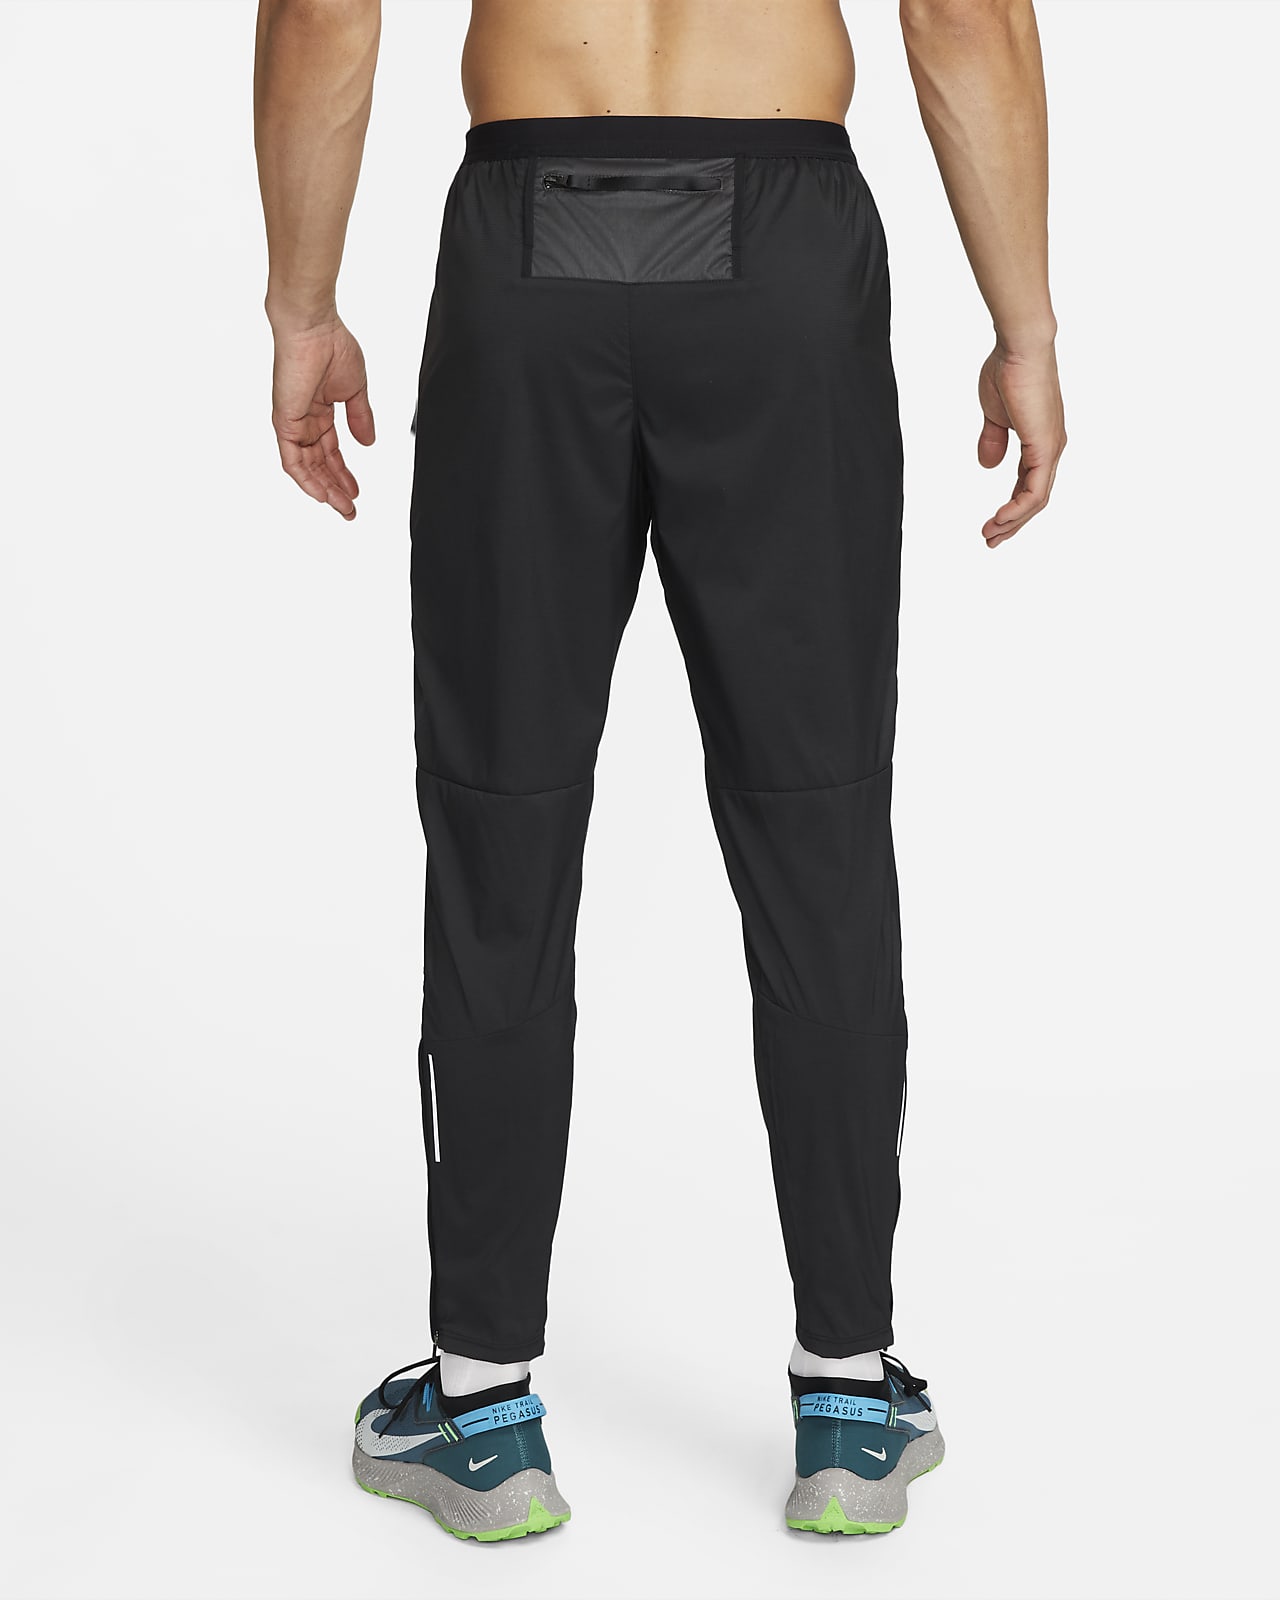 Nike Phenom Elite Knit Pants - Men's